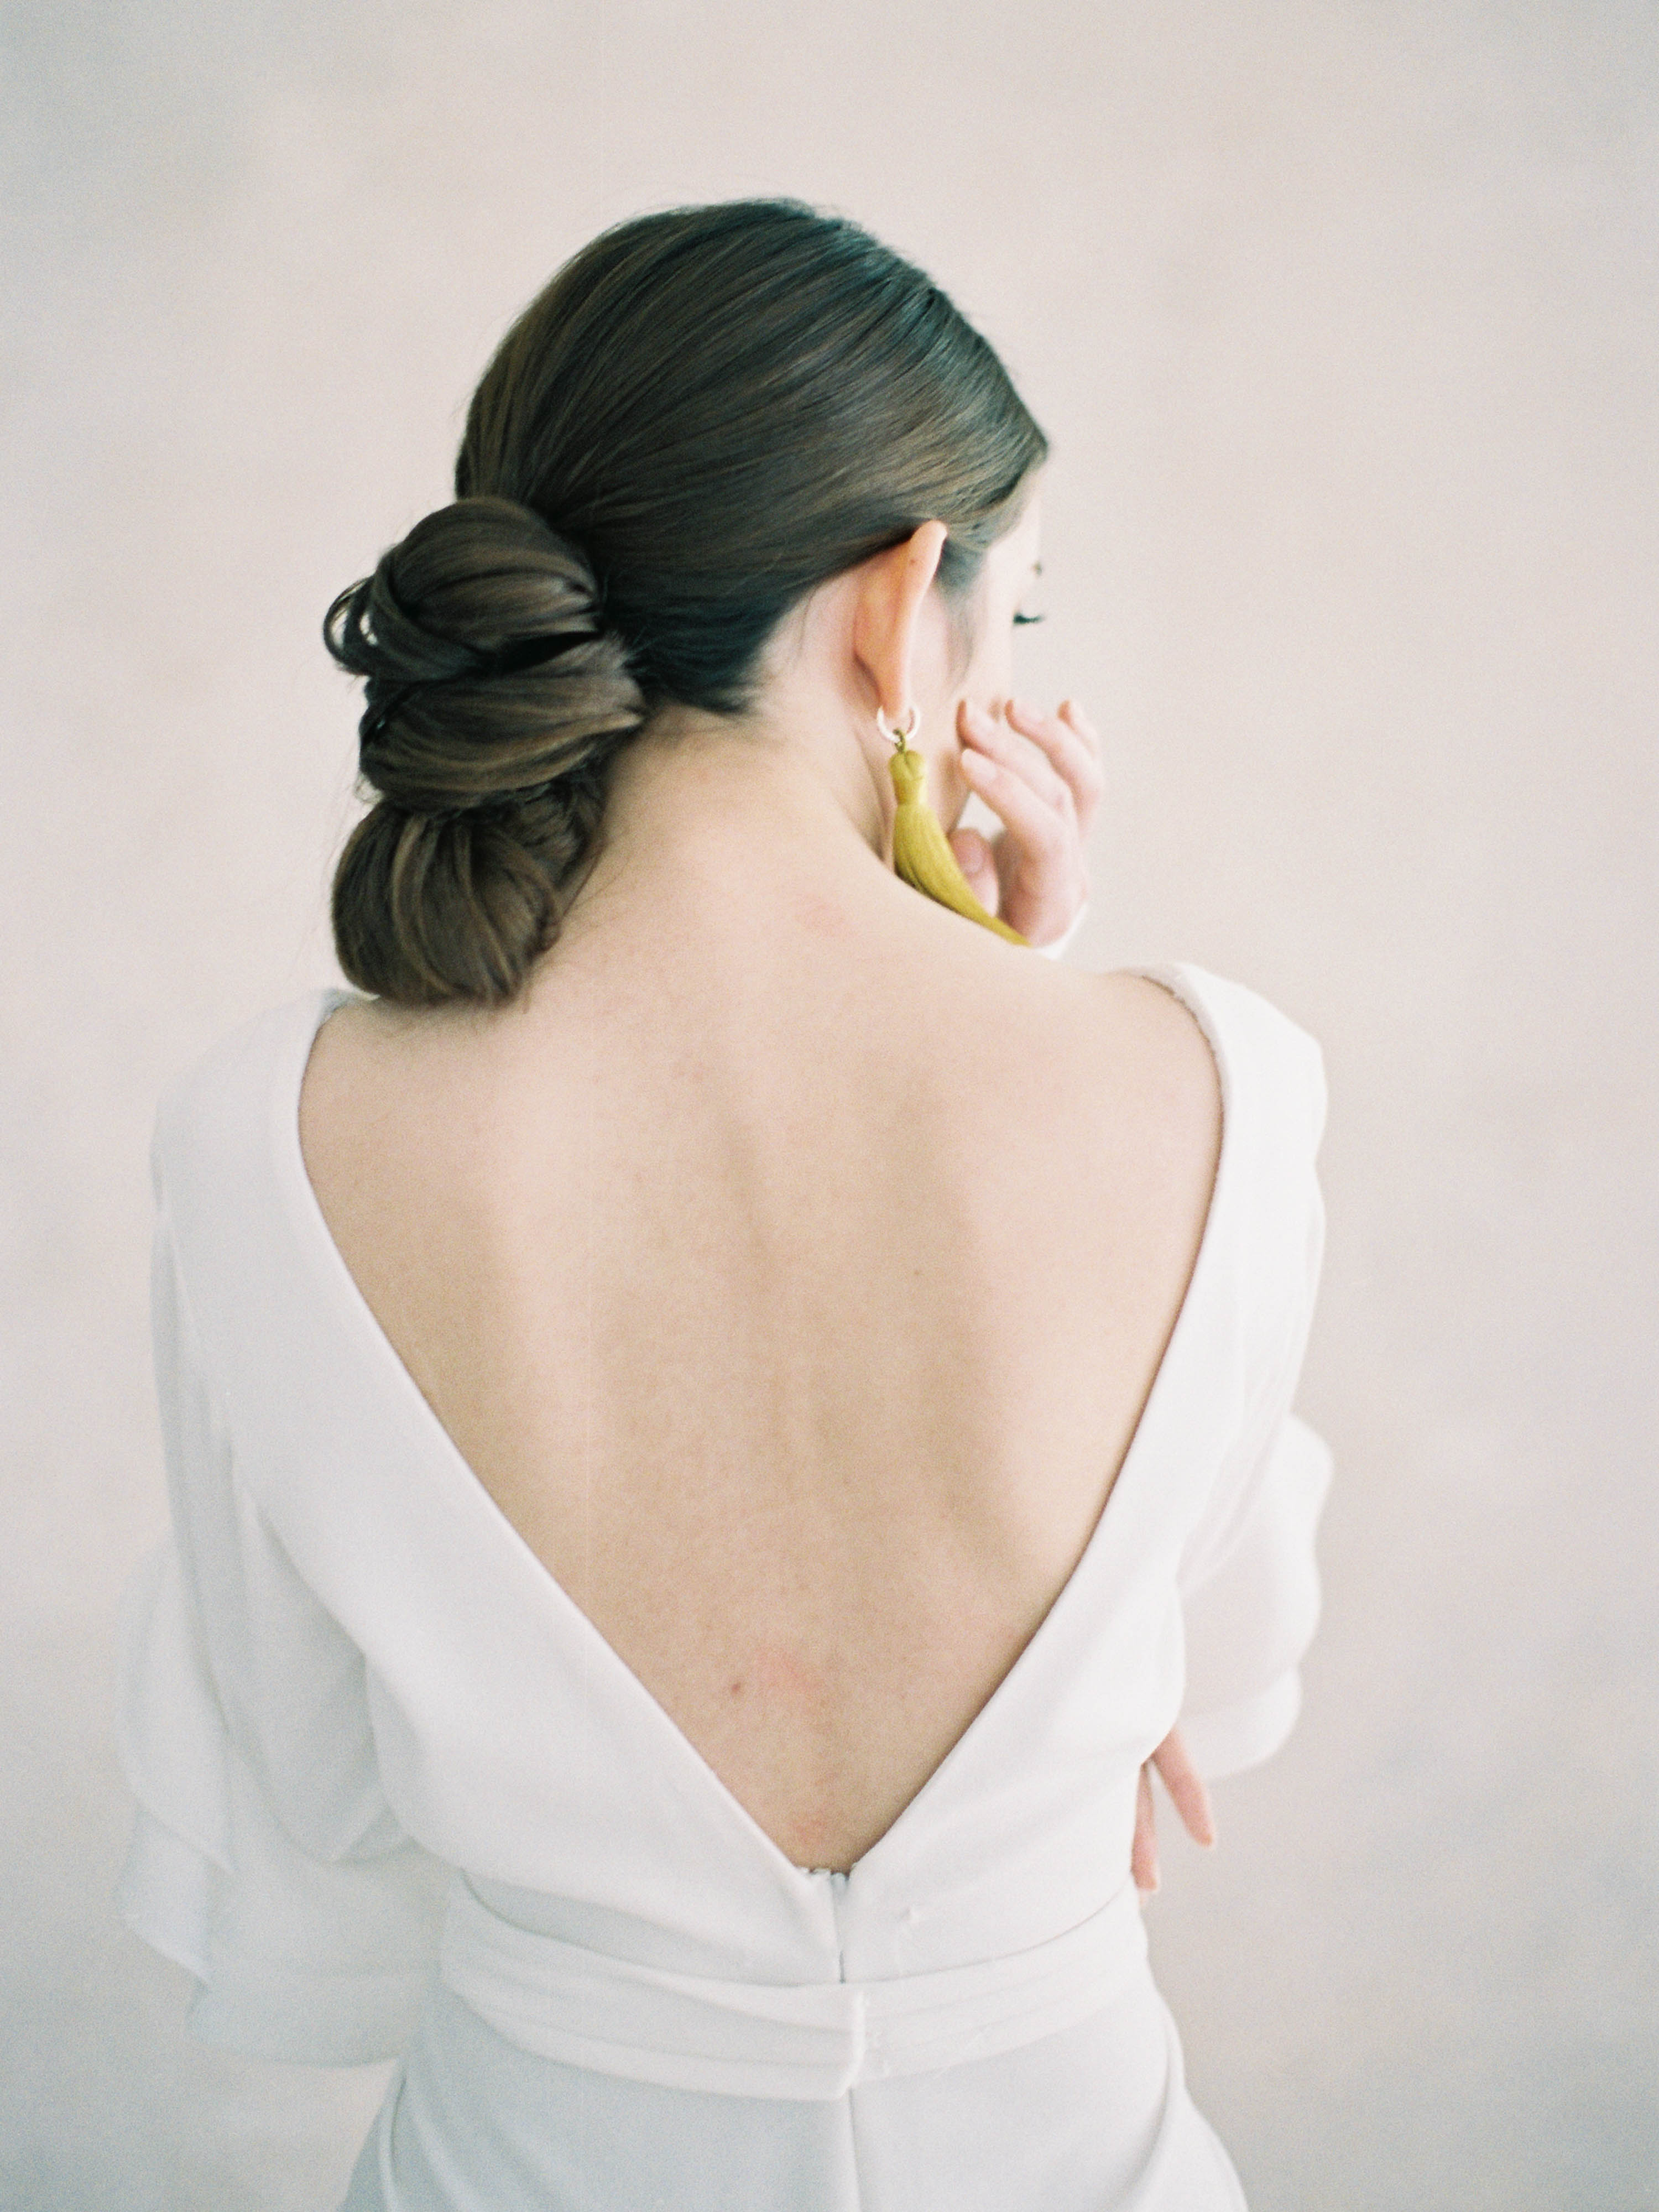 Jinza Bridal Satin - Low Back Long Sleeve Sheath Wedding Dress, White